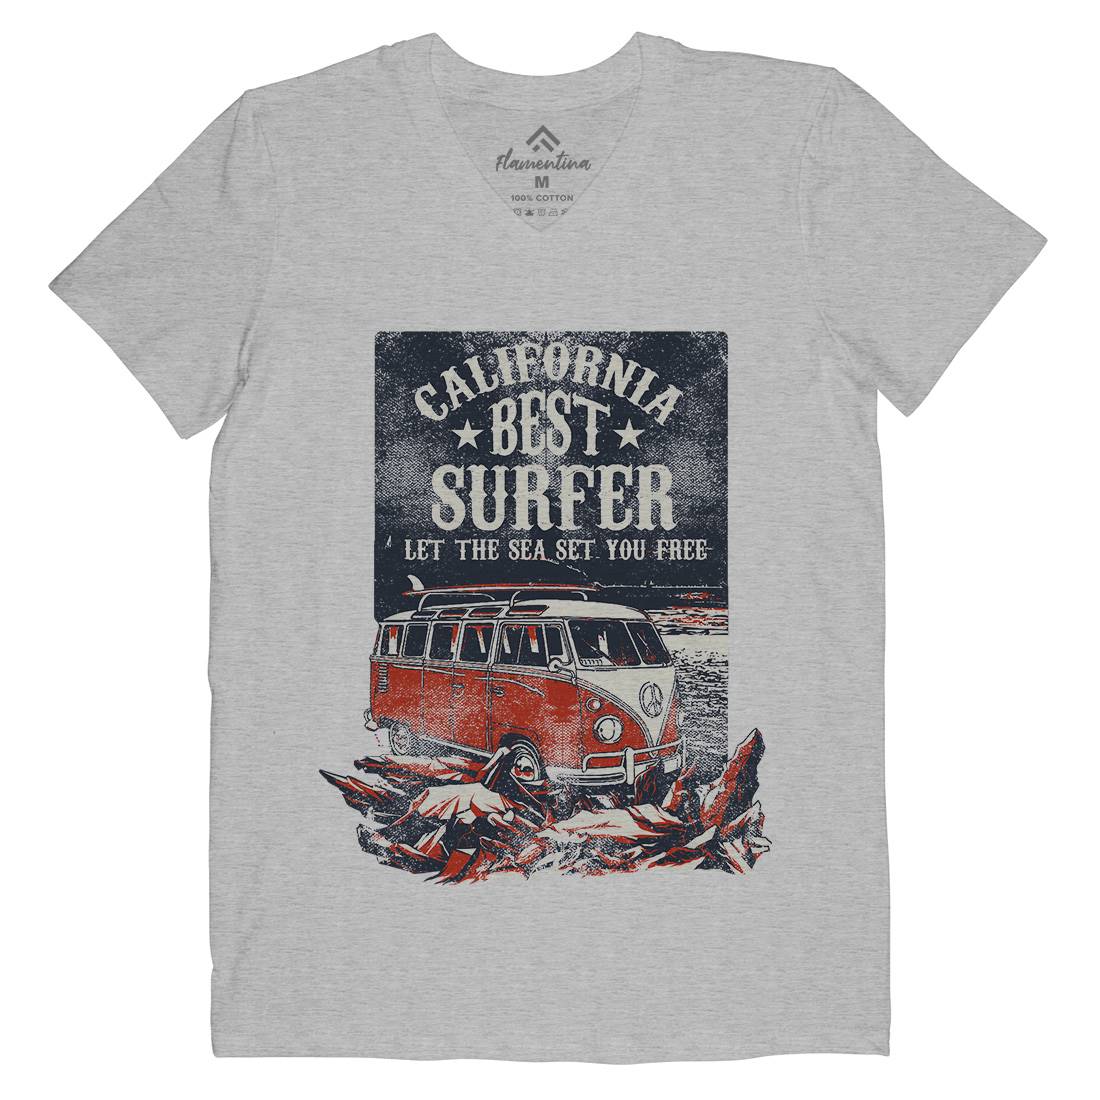 Let The Sea Set You Free Mens V-Neck T-Shirt Surf C956